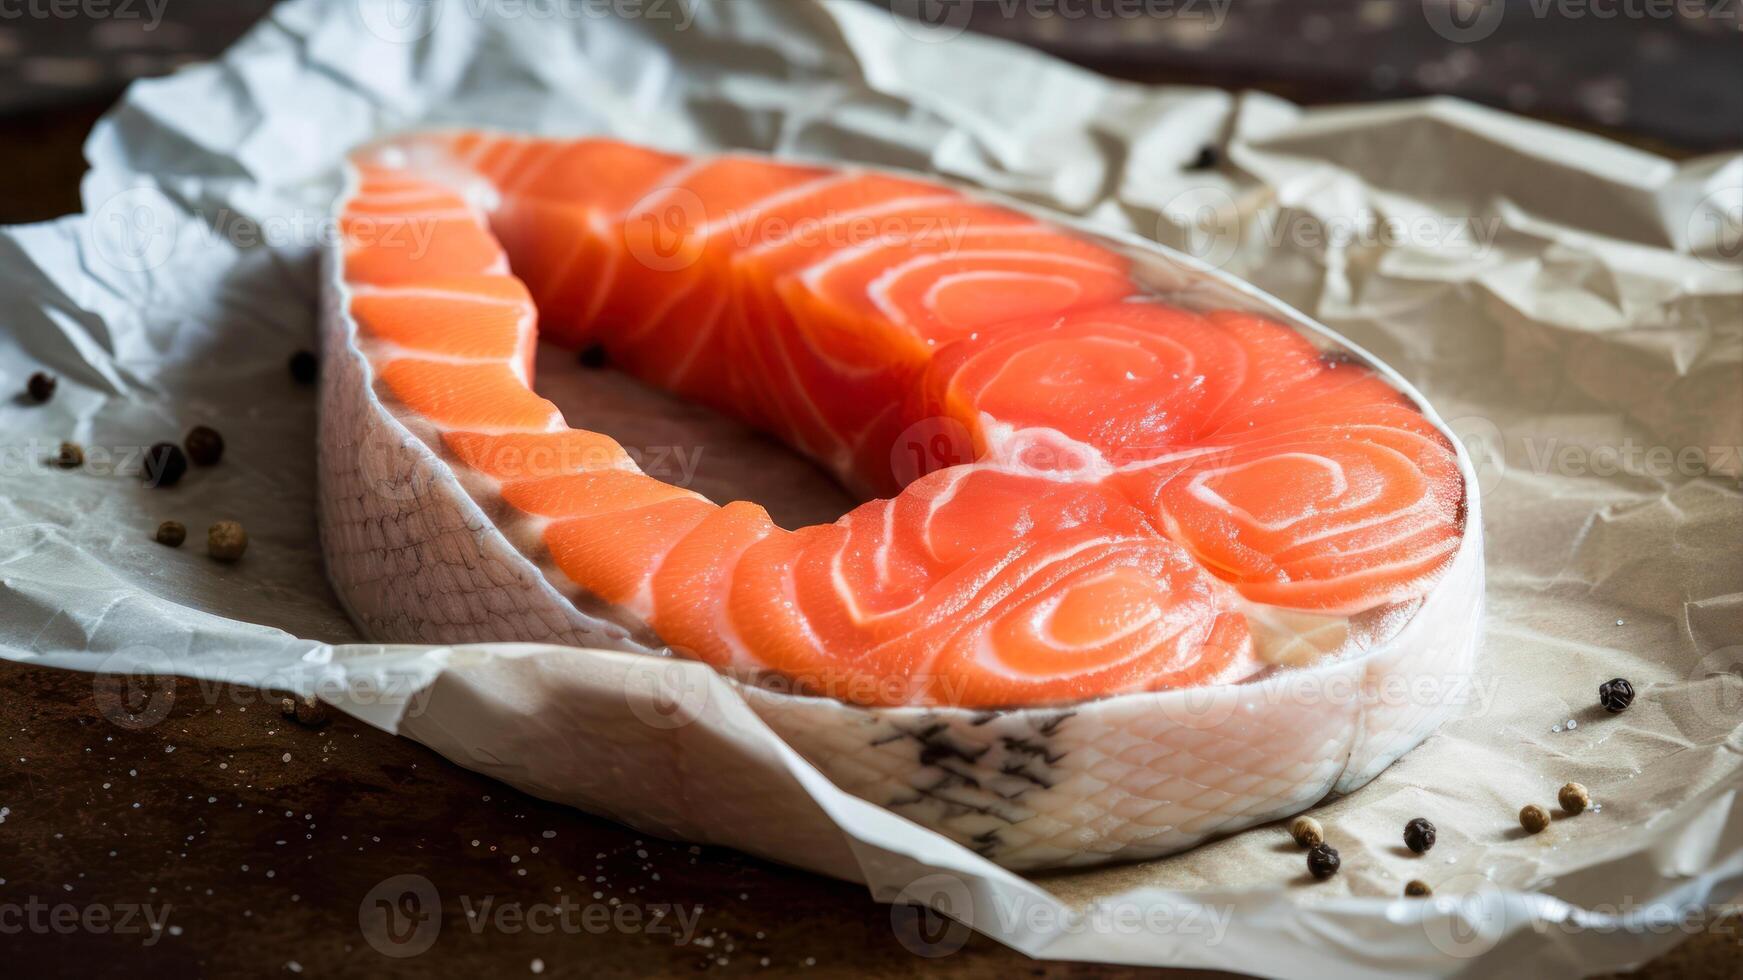 ai generado crudo salmón pescado filete en horneando papel. selectivo enfocar. foto